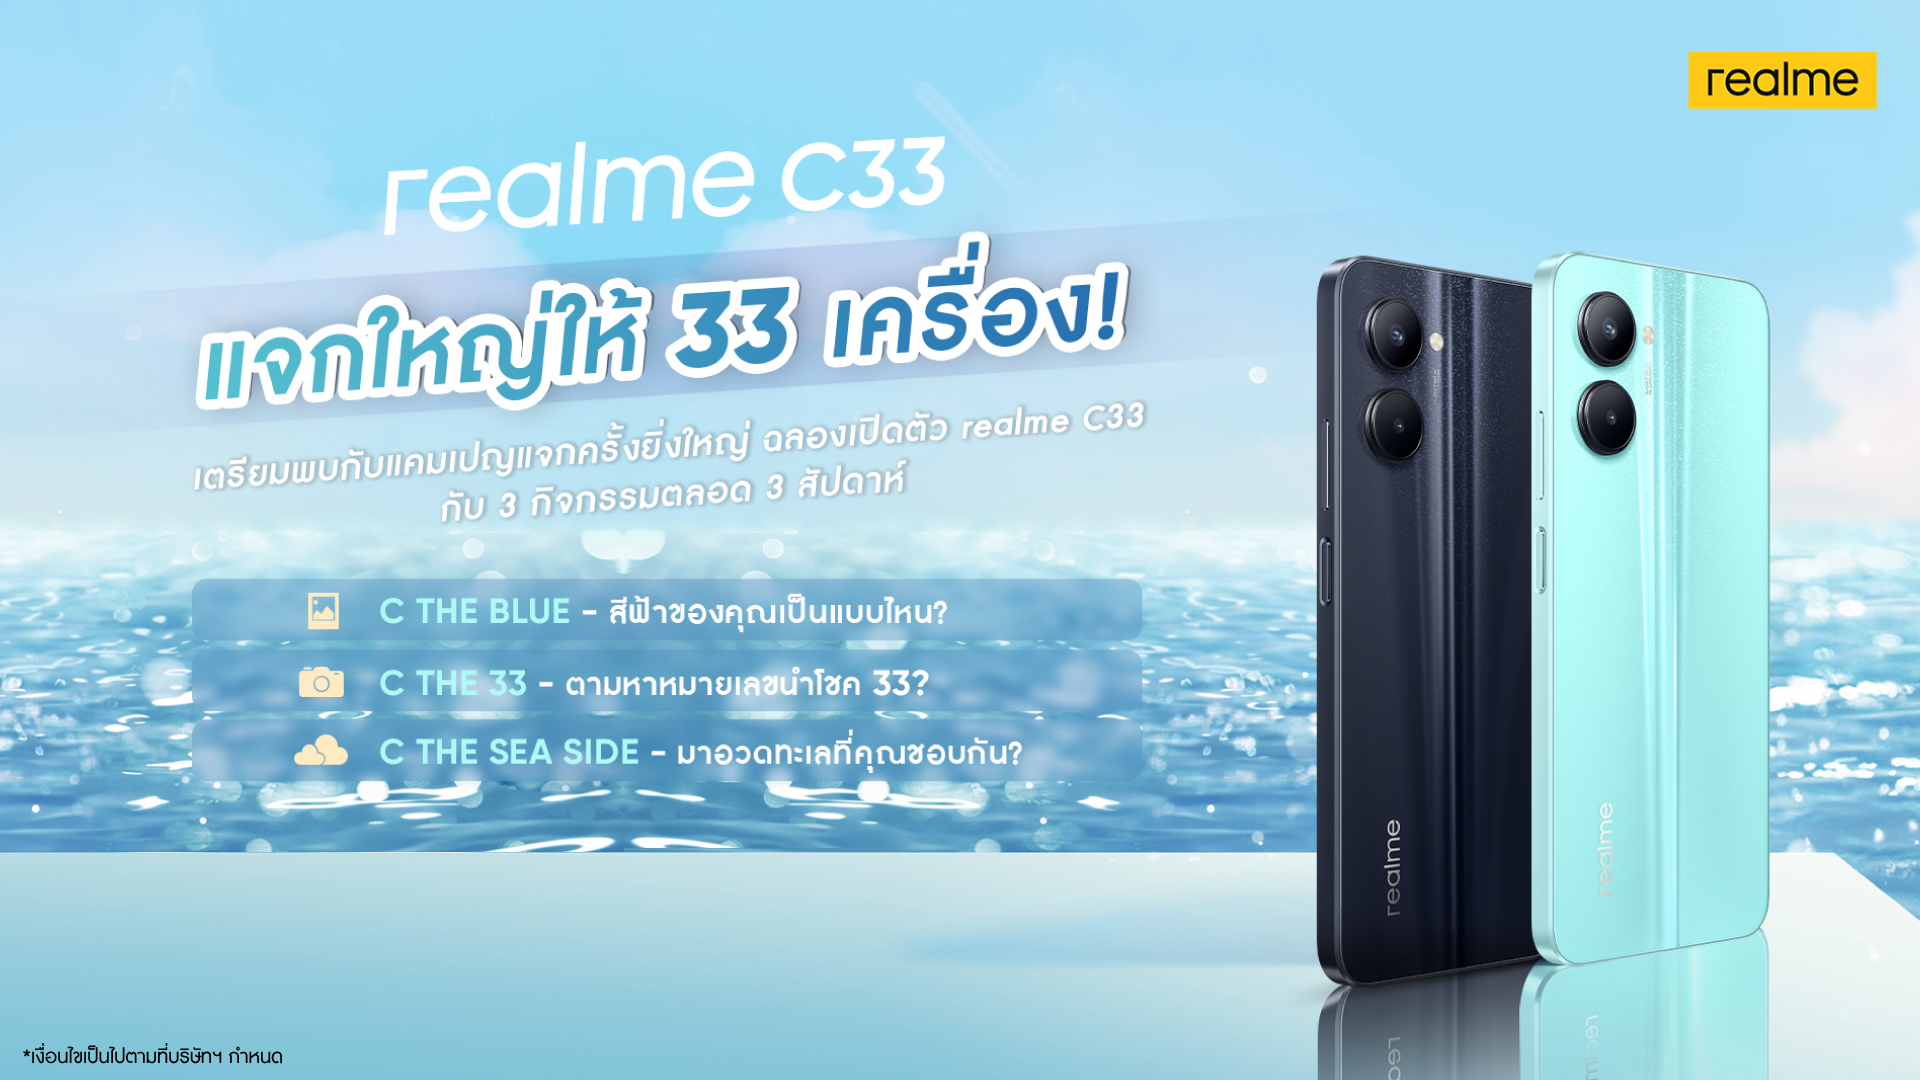 realme C33 เผยดีไซน์ความงามของท้องทะเล โดดเด่นด้วยกล้อง 50 MP เตรียมมาเขย่าตลาดสมาร์ตโฟนไทยเร็ว ๆ นี้